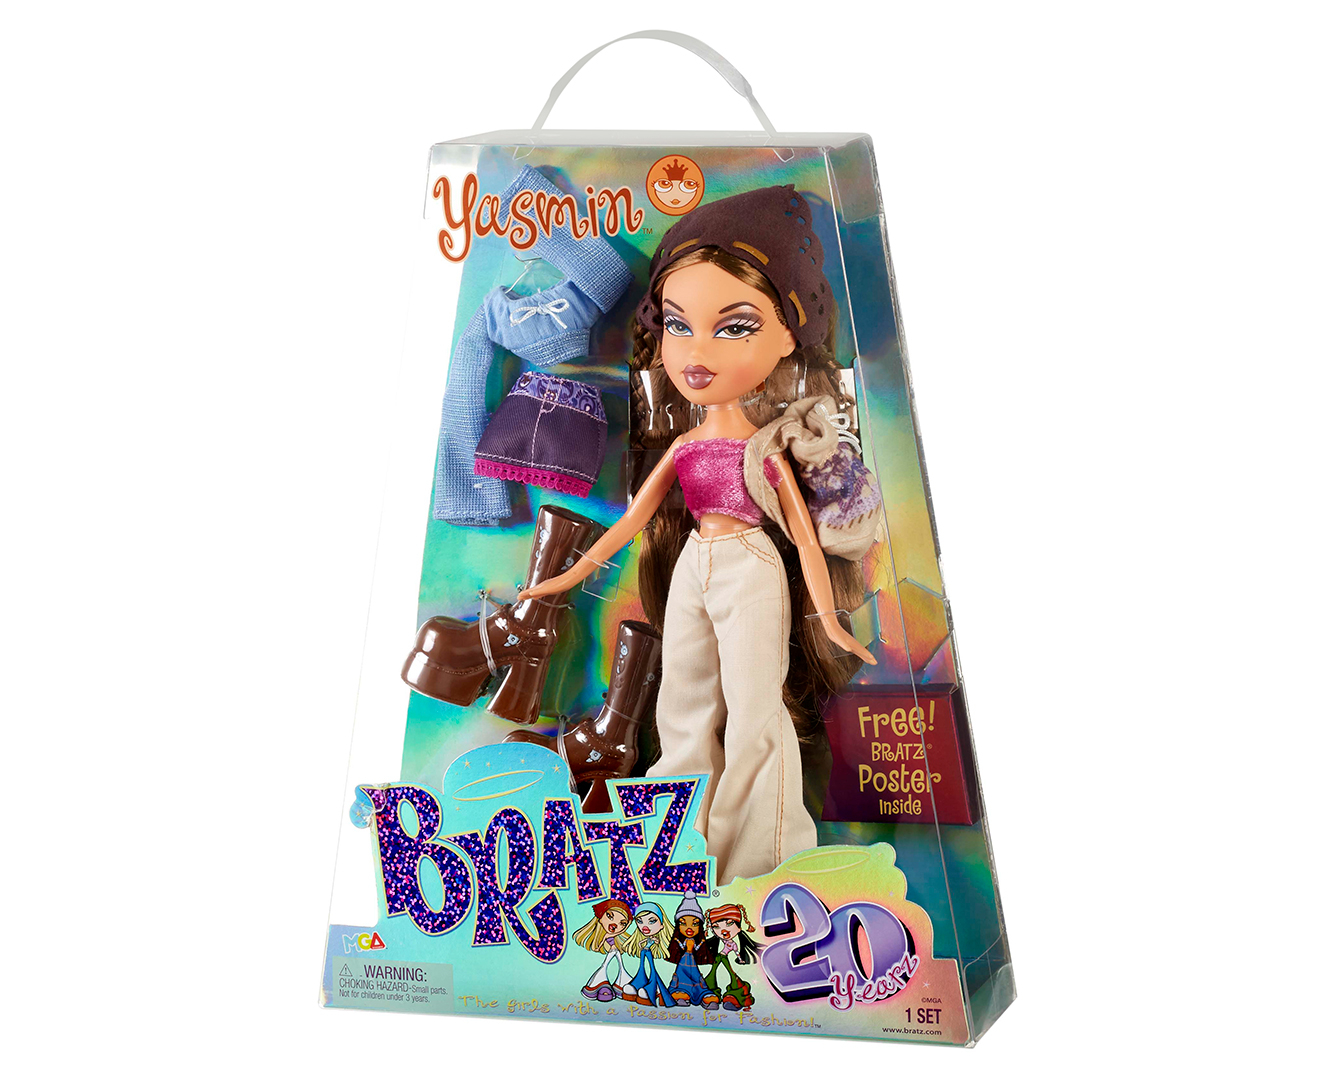 Bratz 20 Yearz Special Edition Original Fashion Doll - Yasmin